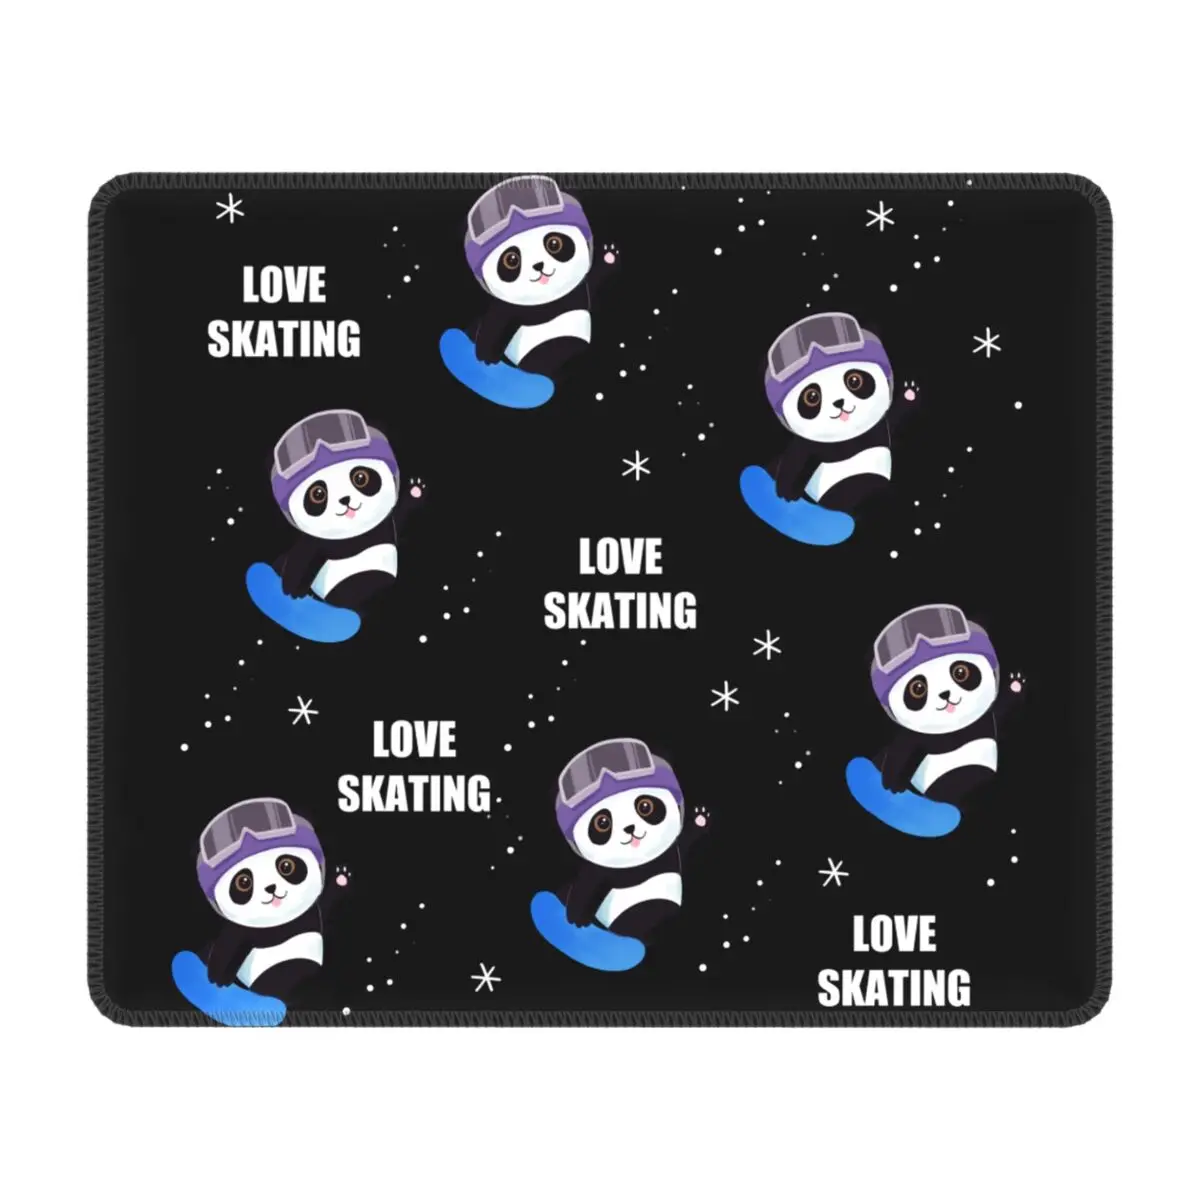 Giant Panda Bear Mouse Pad Customized Anti-Slip Rubber Base Gamer Mousepad Accessories Love Skating Office Desktop Mat